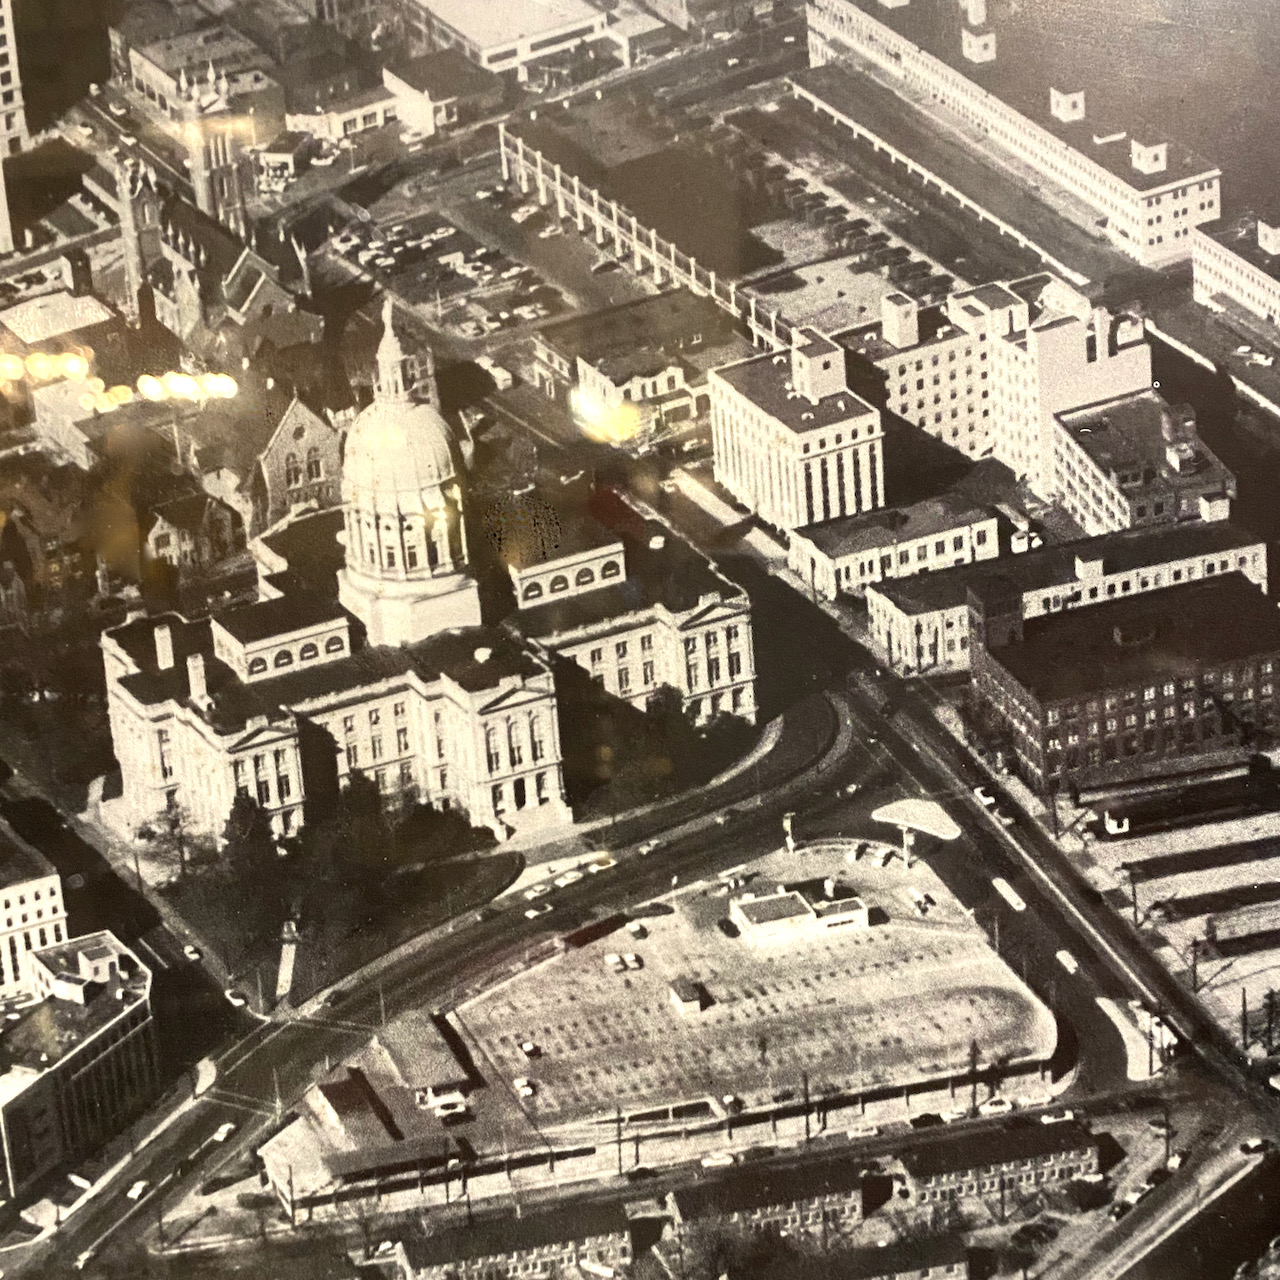 Early 1960s Photograph Of Downtown Atlanta At City Issue Atlanta